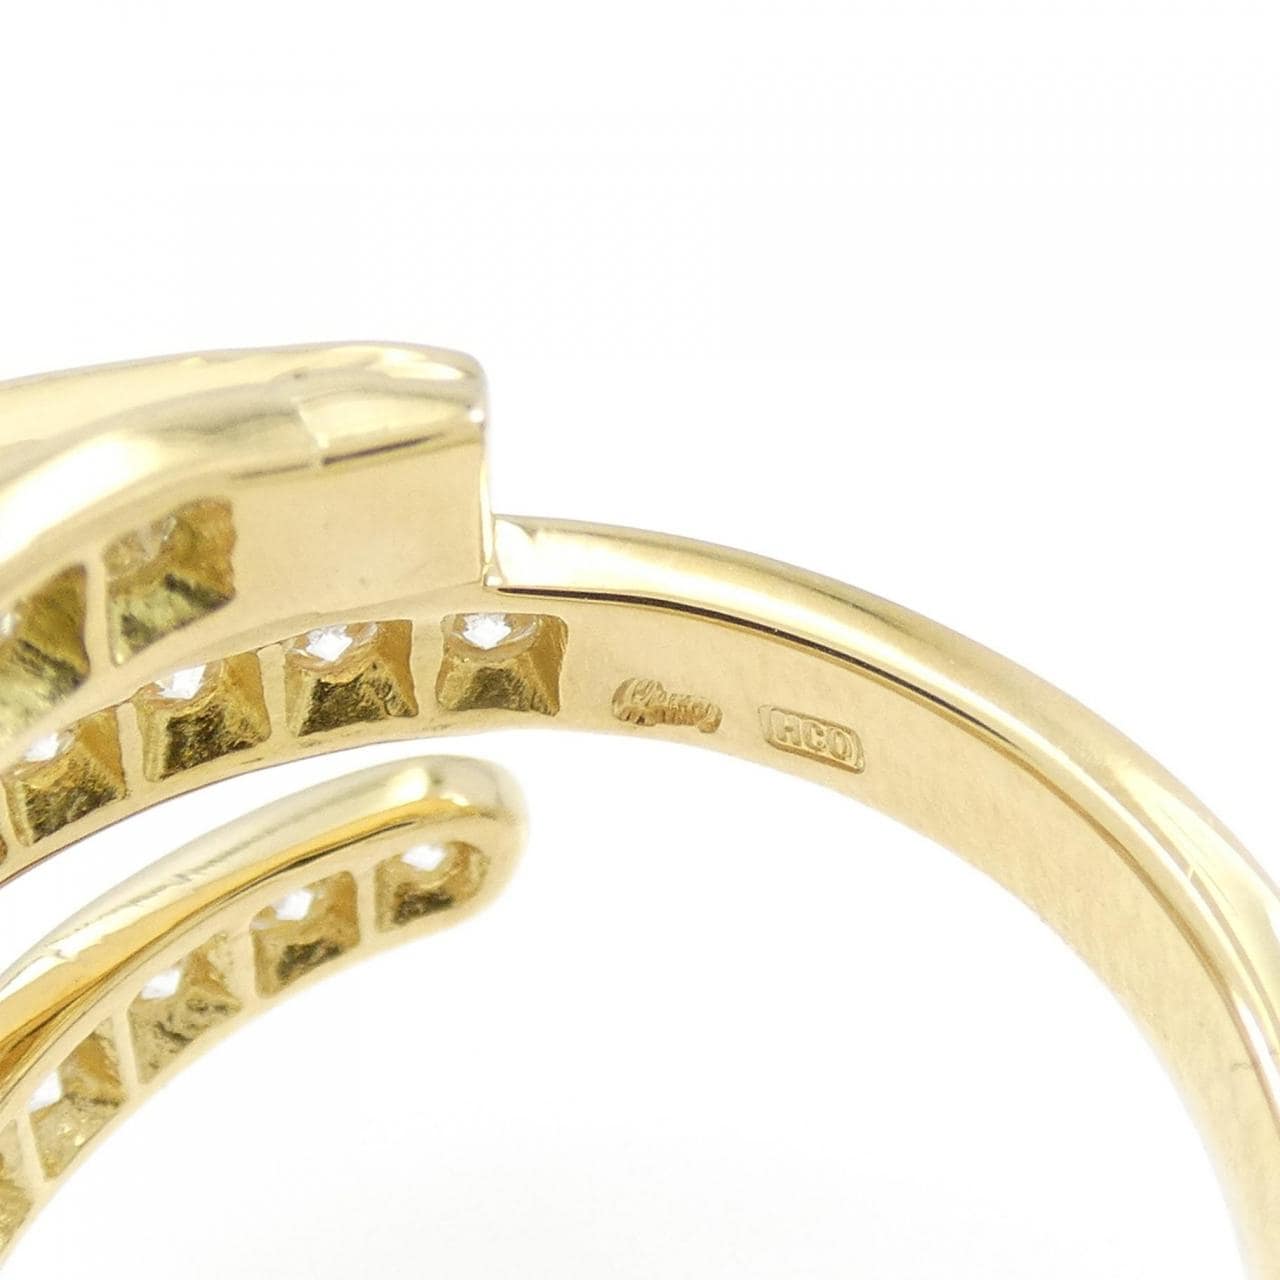 Queen Diamond ring 1.68CT